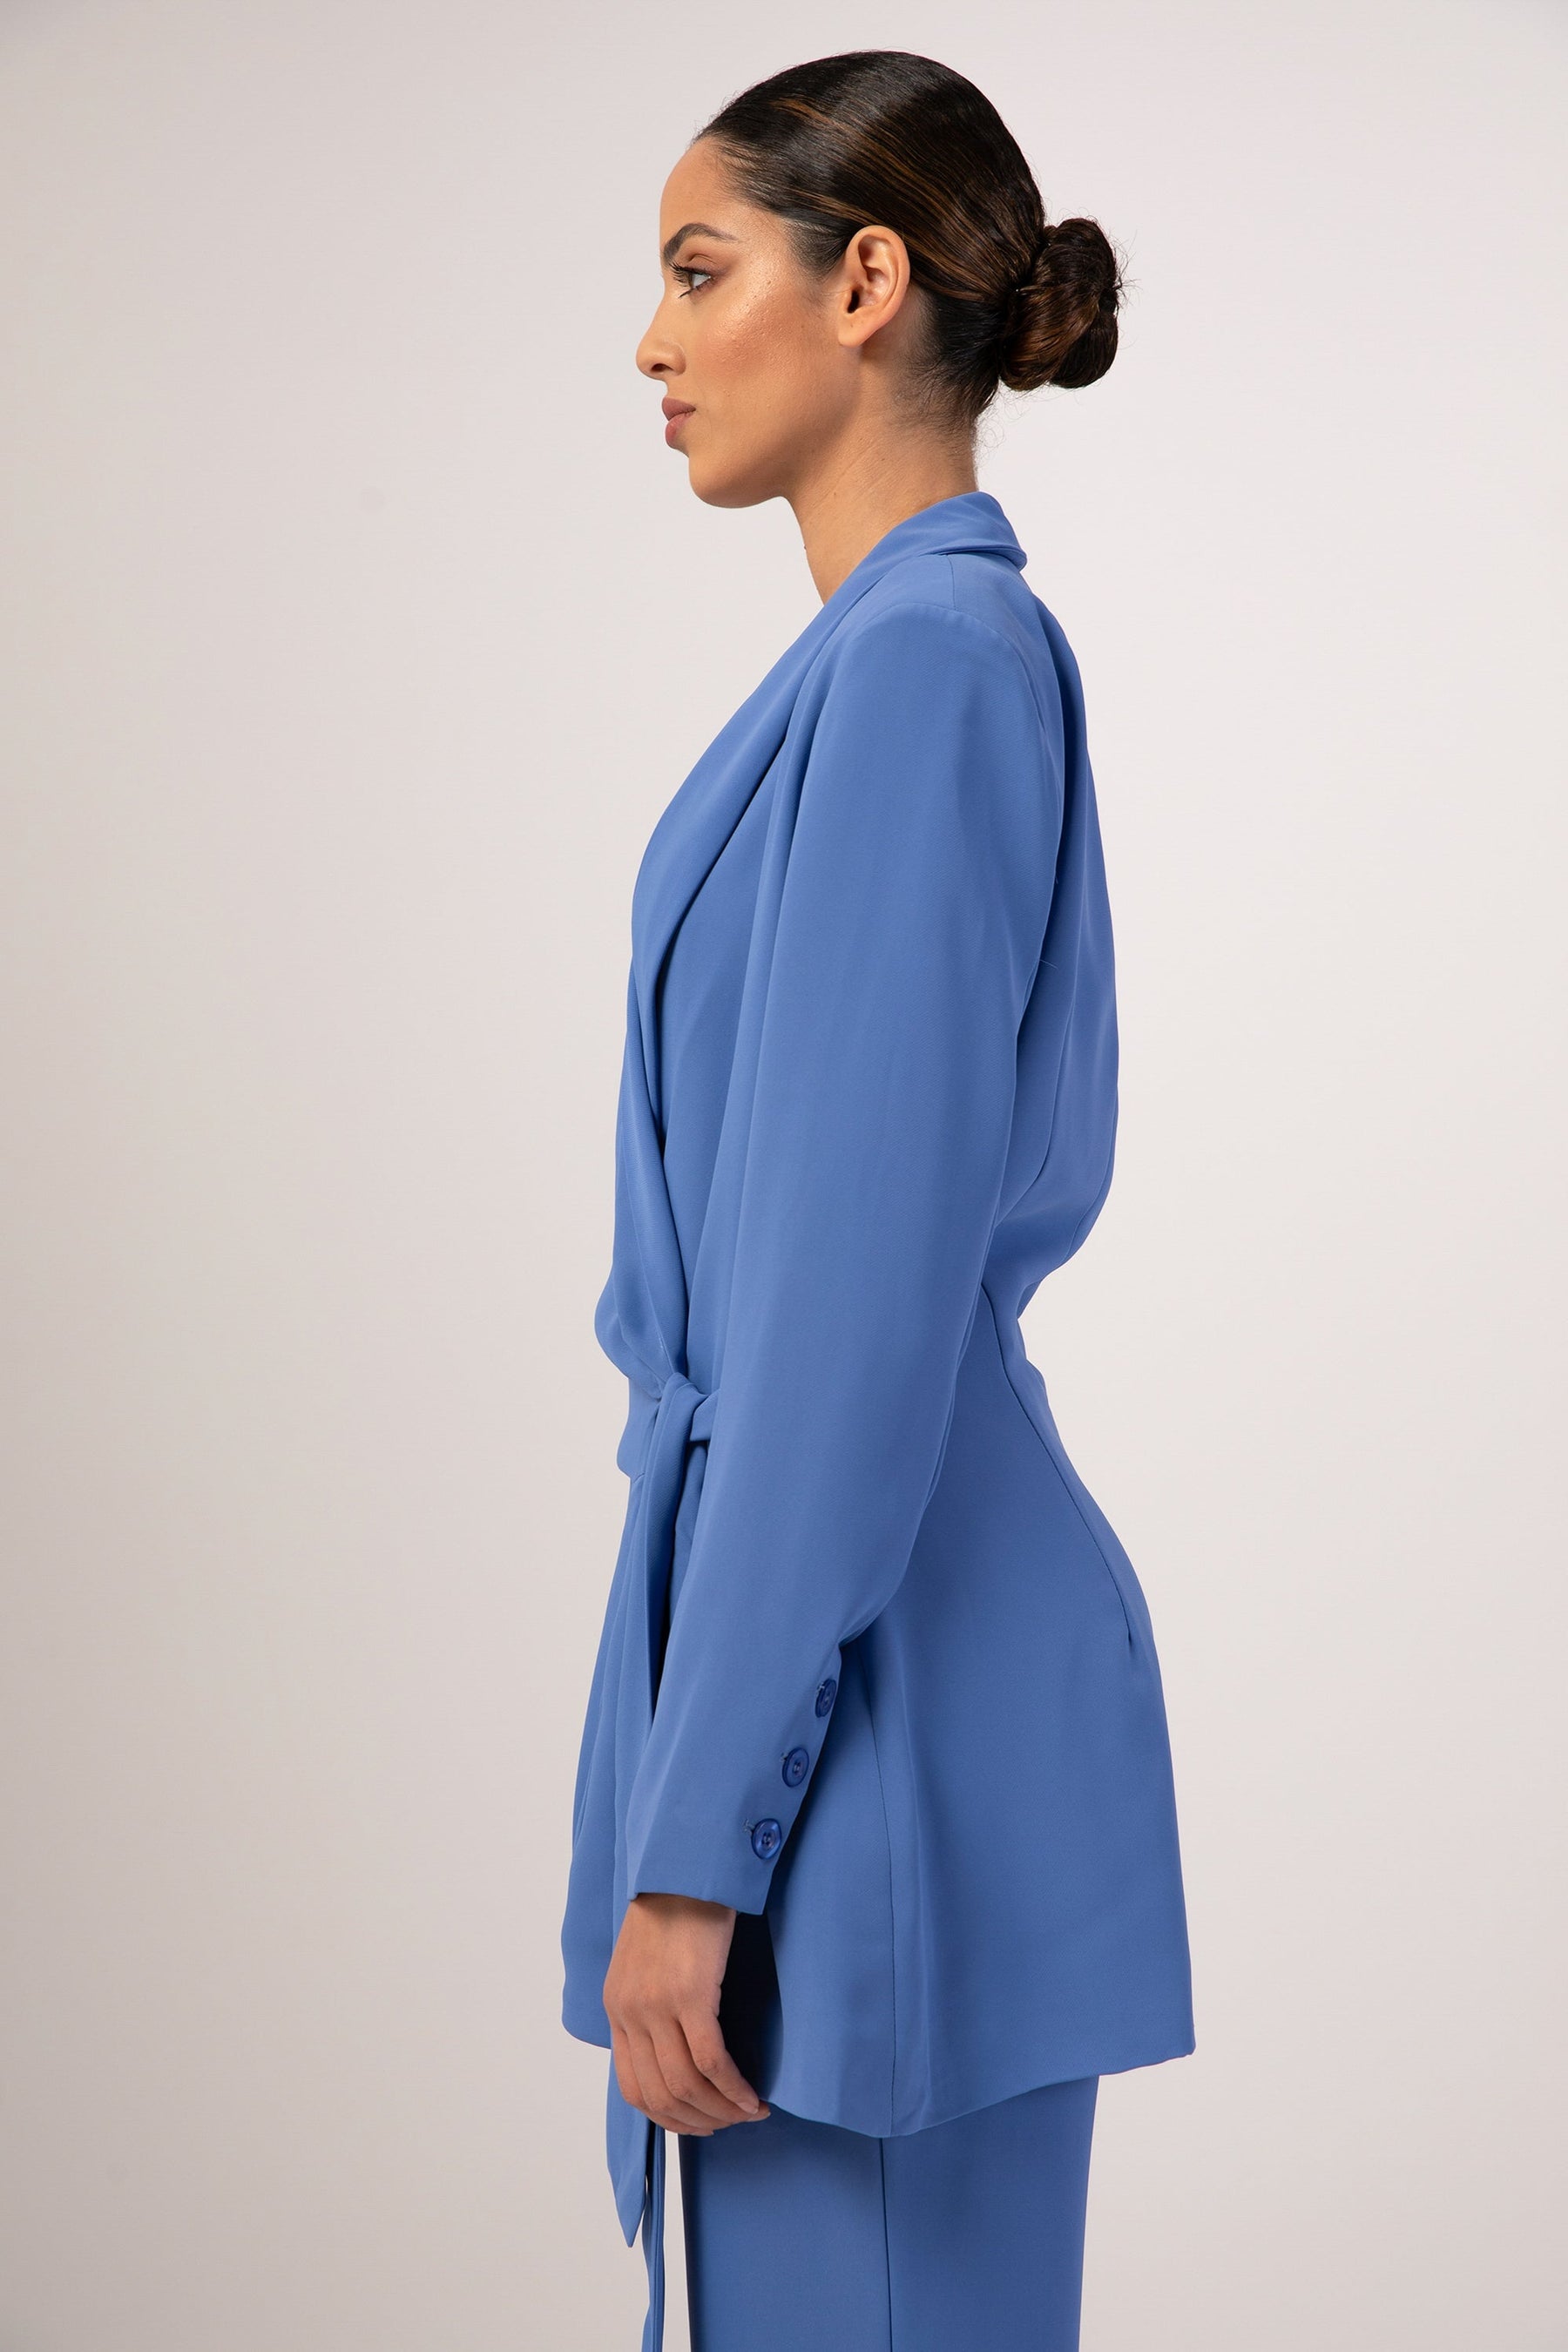 Ayla Tie Waist Blazer - Cobalt Blue Veiled Collection 